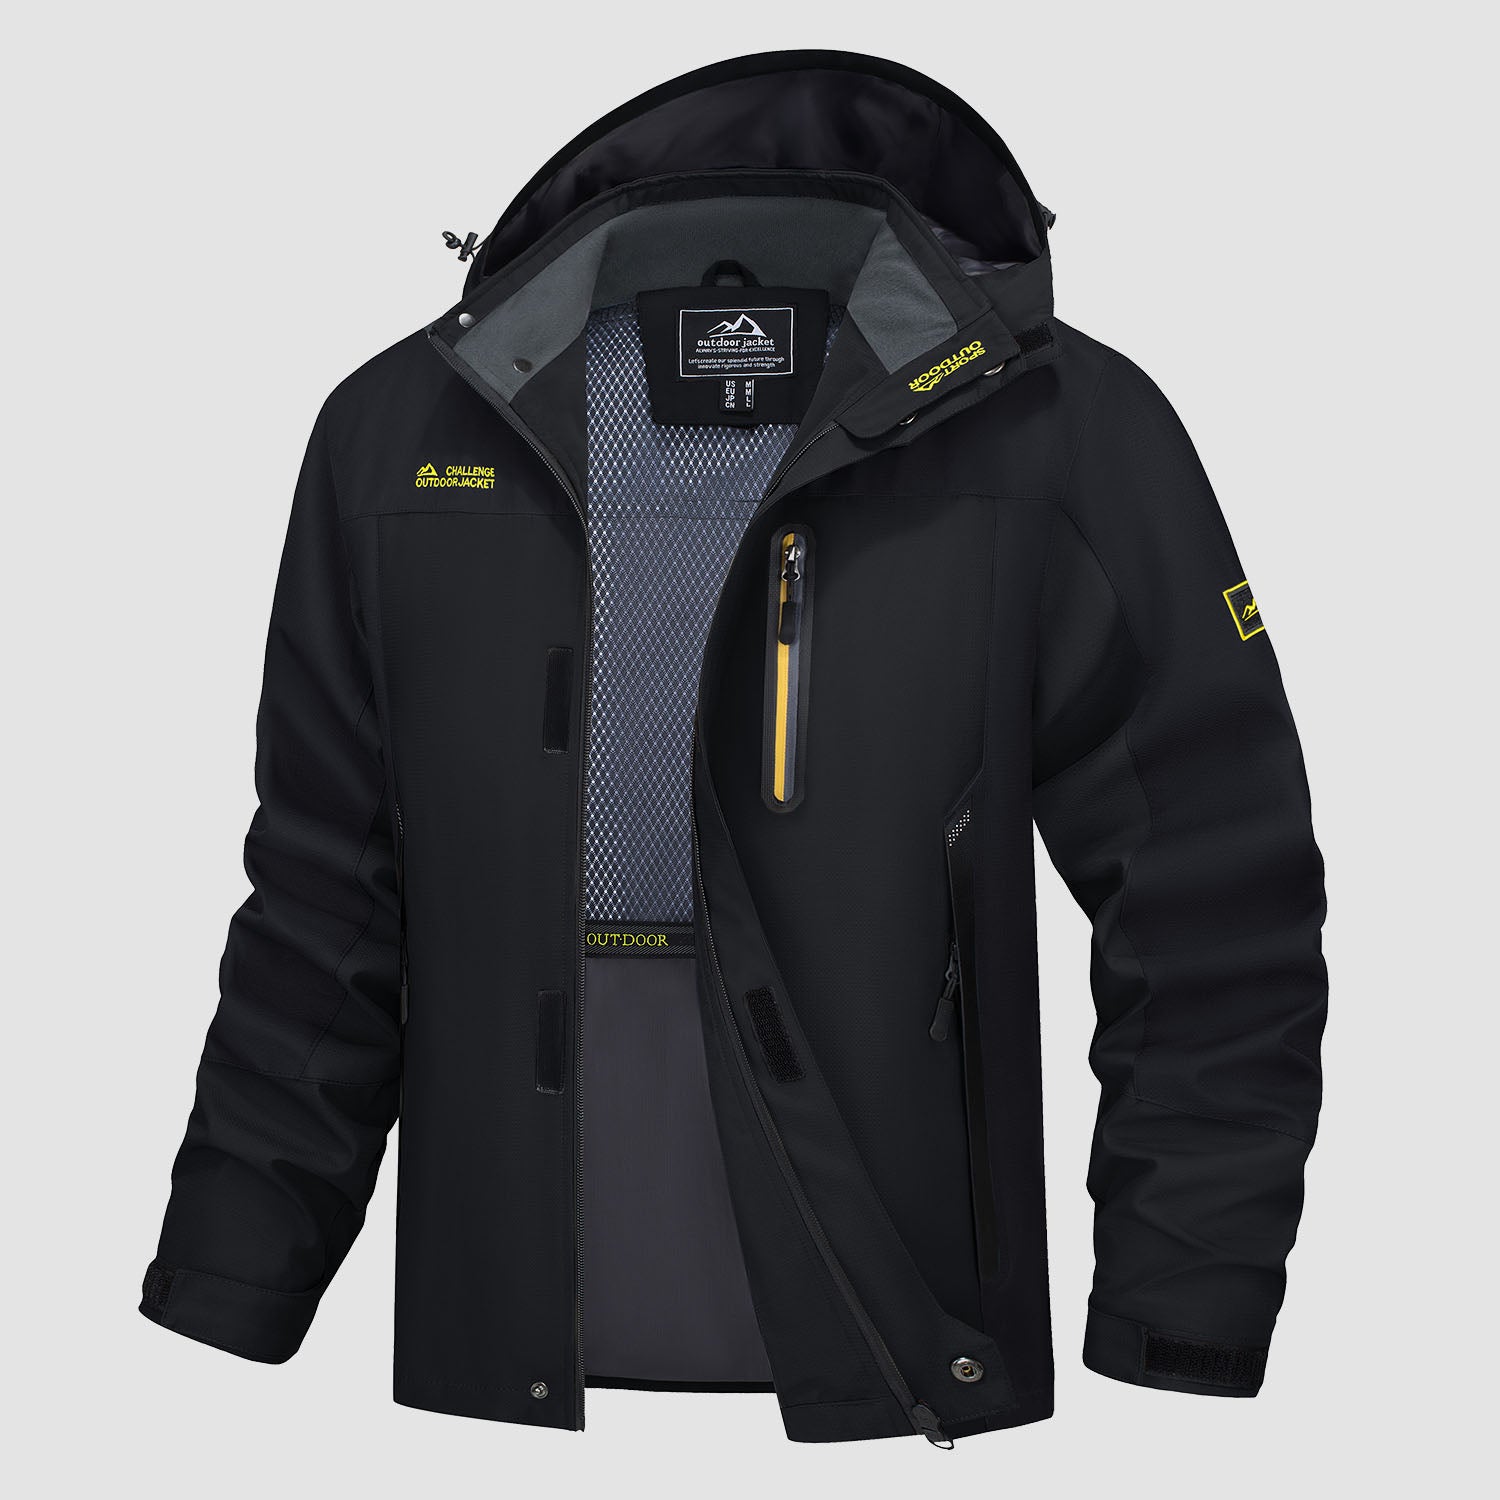 Men's Hooded Jacket Waterproof Windbreaker Coat for Outdoors, Black / 2XL